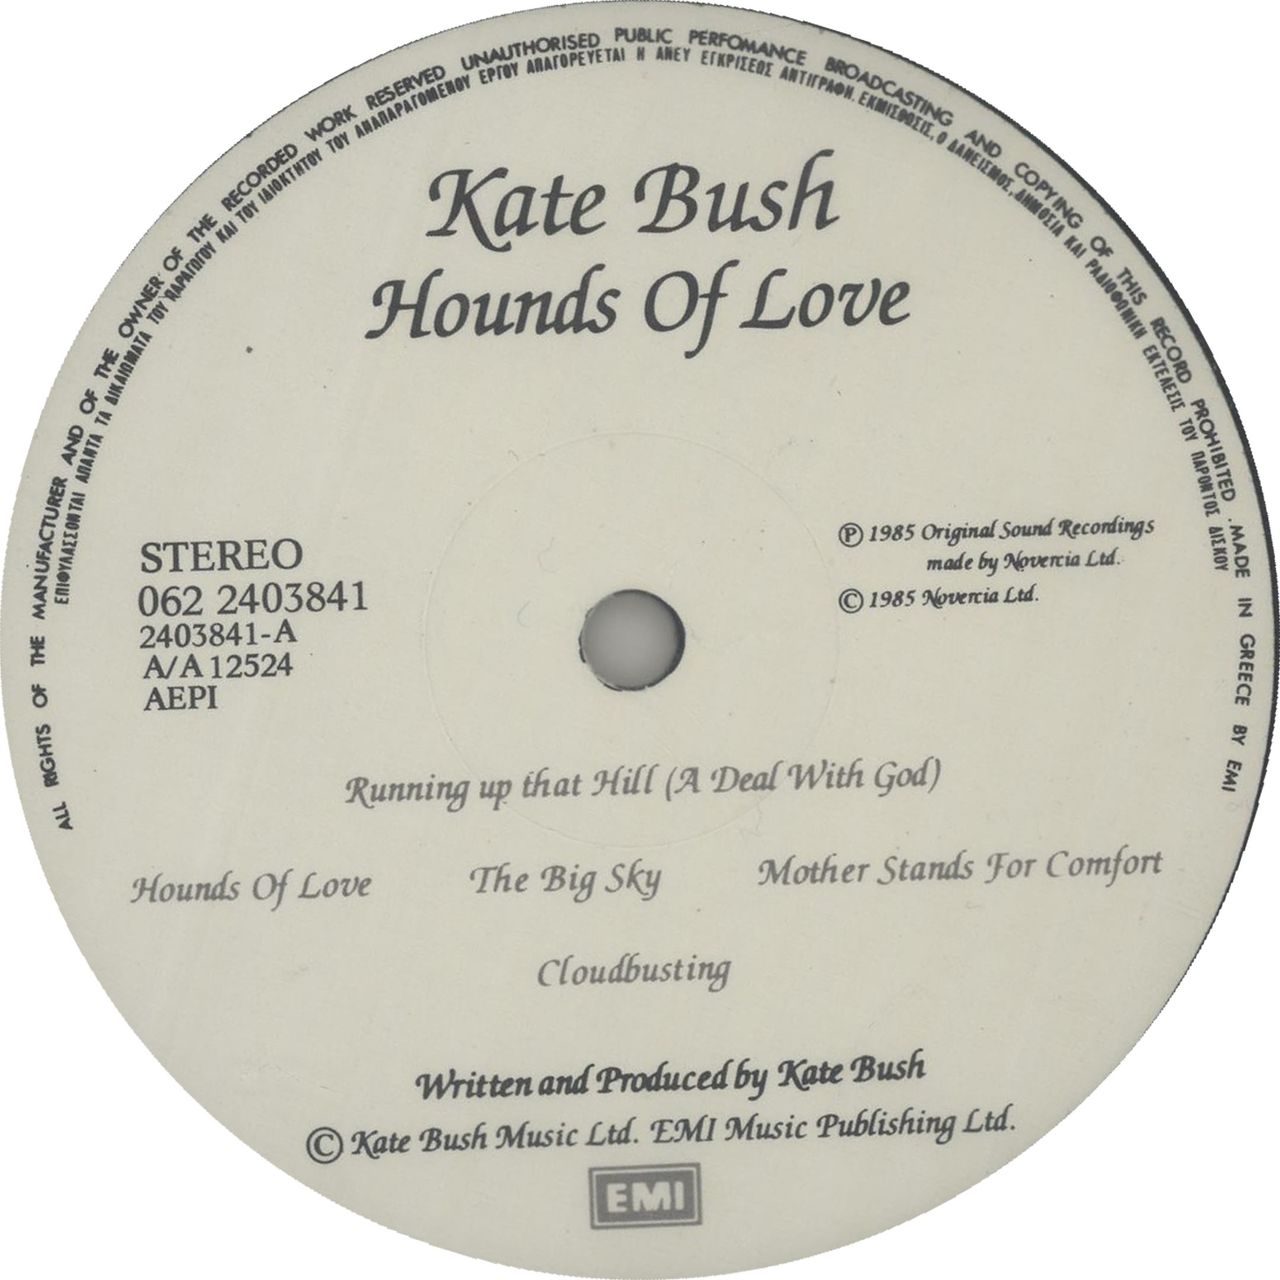 Kate Bush Hounds Of Love Greek LP — RareVinyl.com